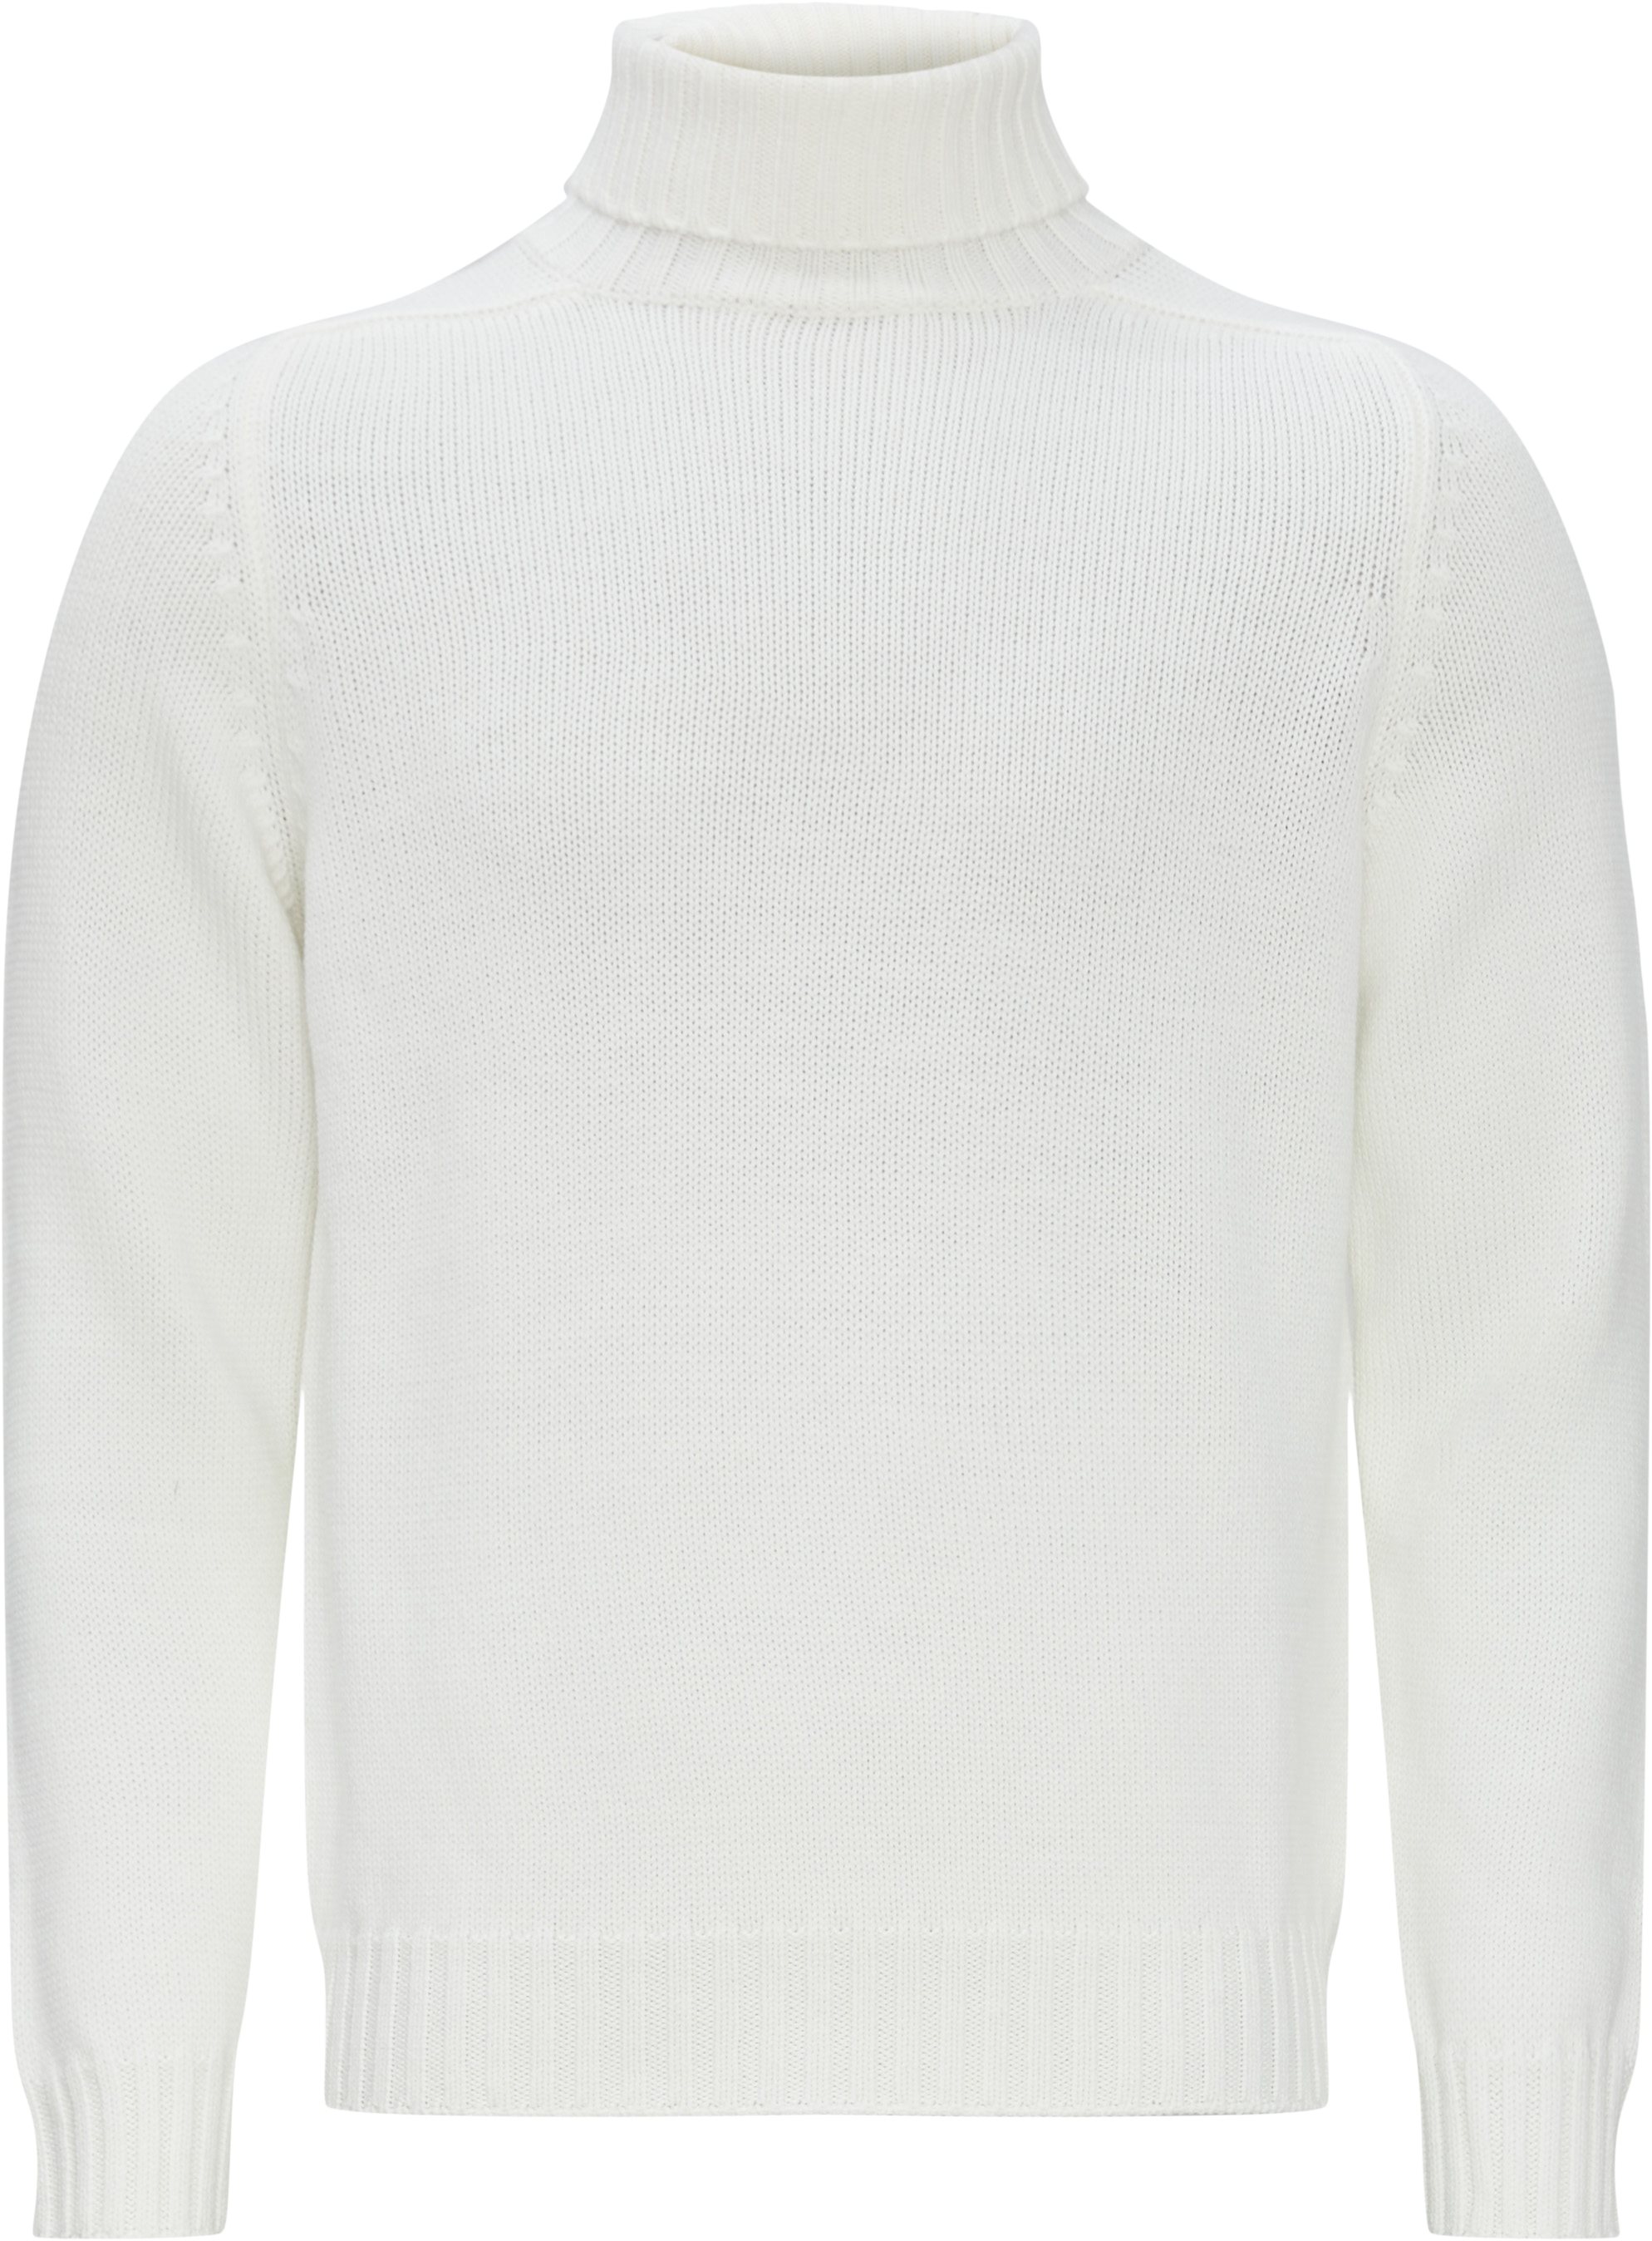 Knitwear - Regular fit - White